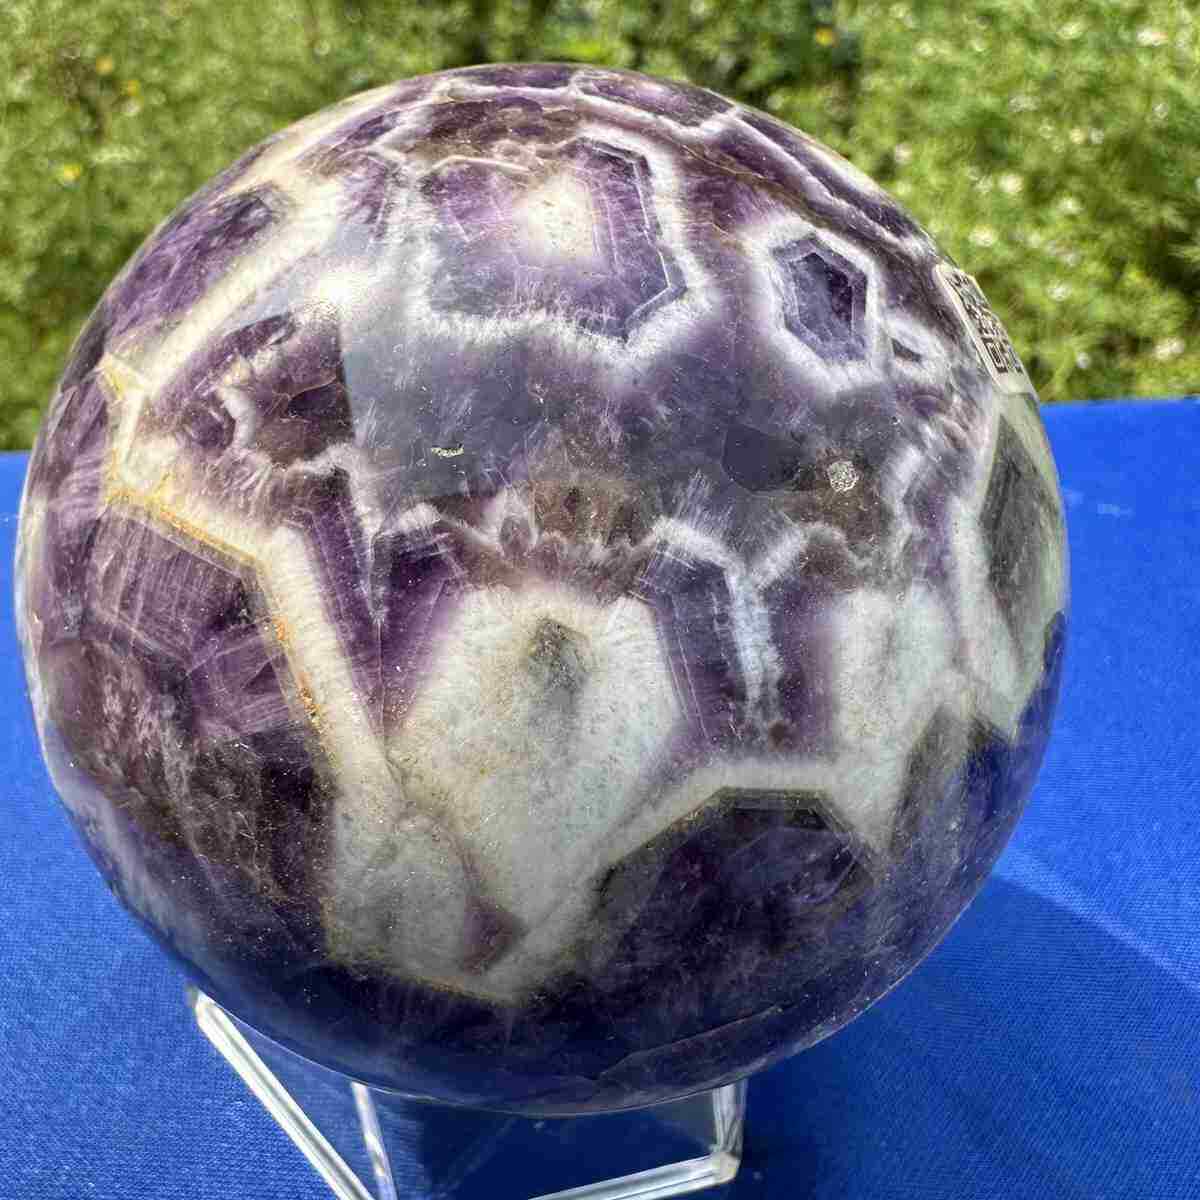 990g natural dream amethyst sphere quartz crystal polished ball healing decor 